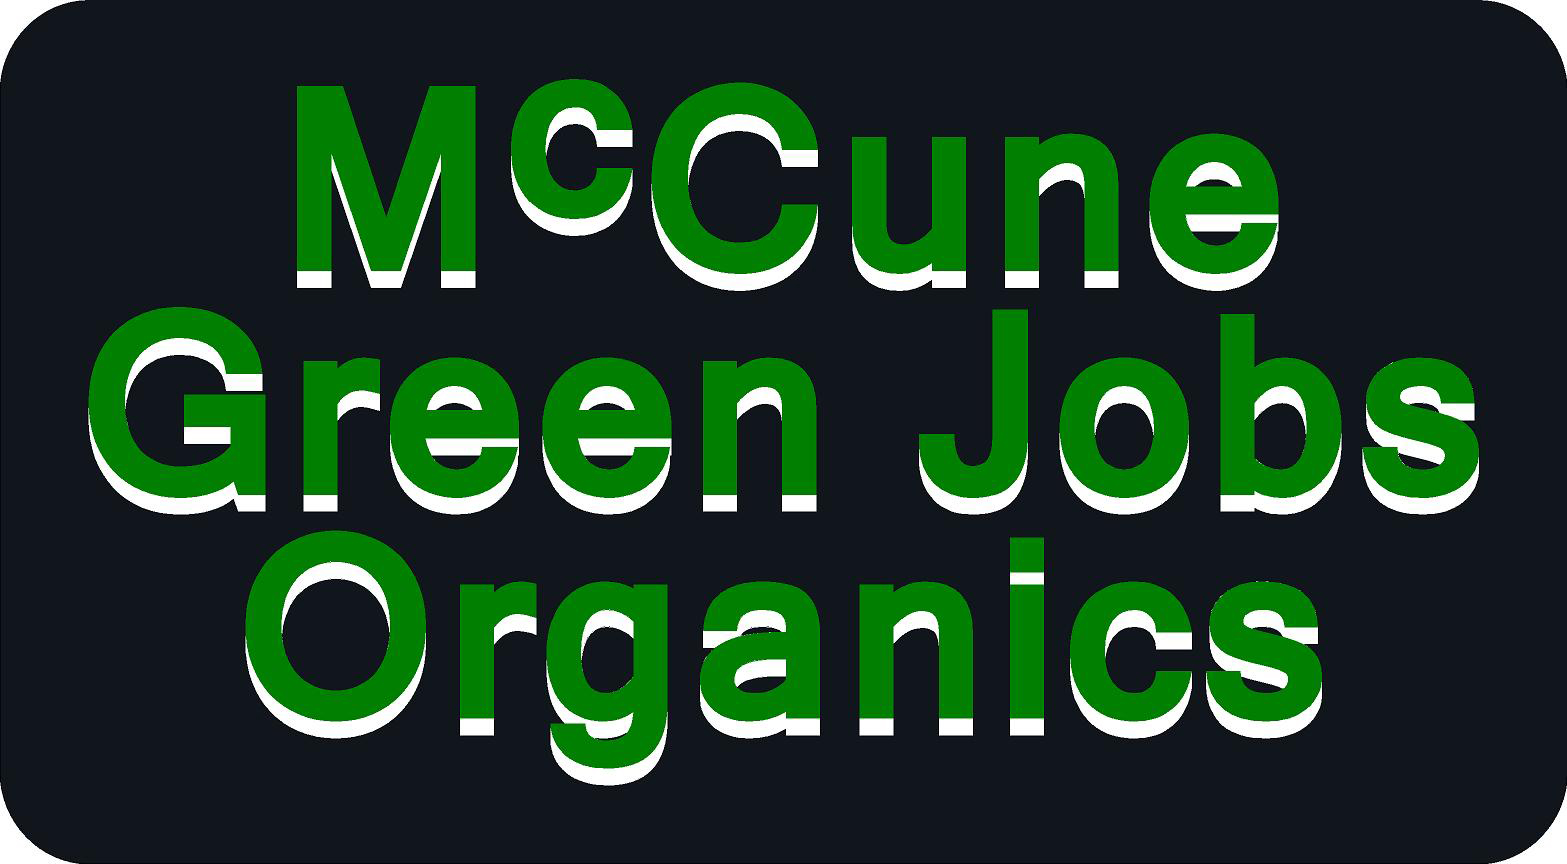 McCune Green Jobs Organics logo